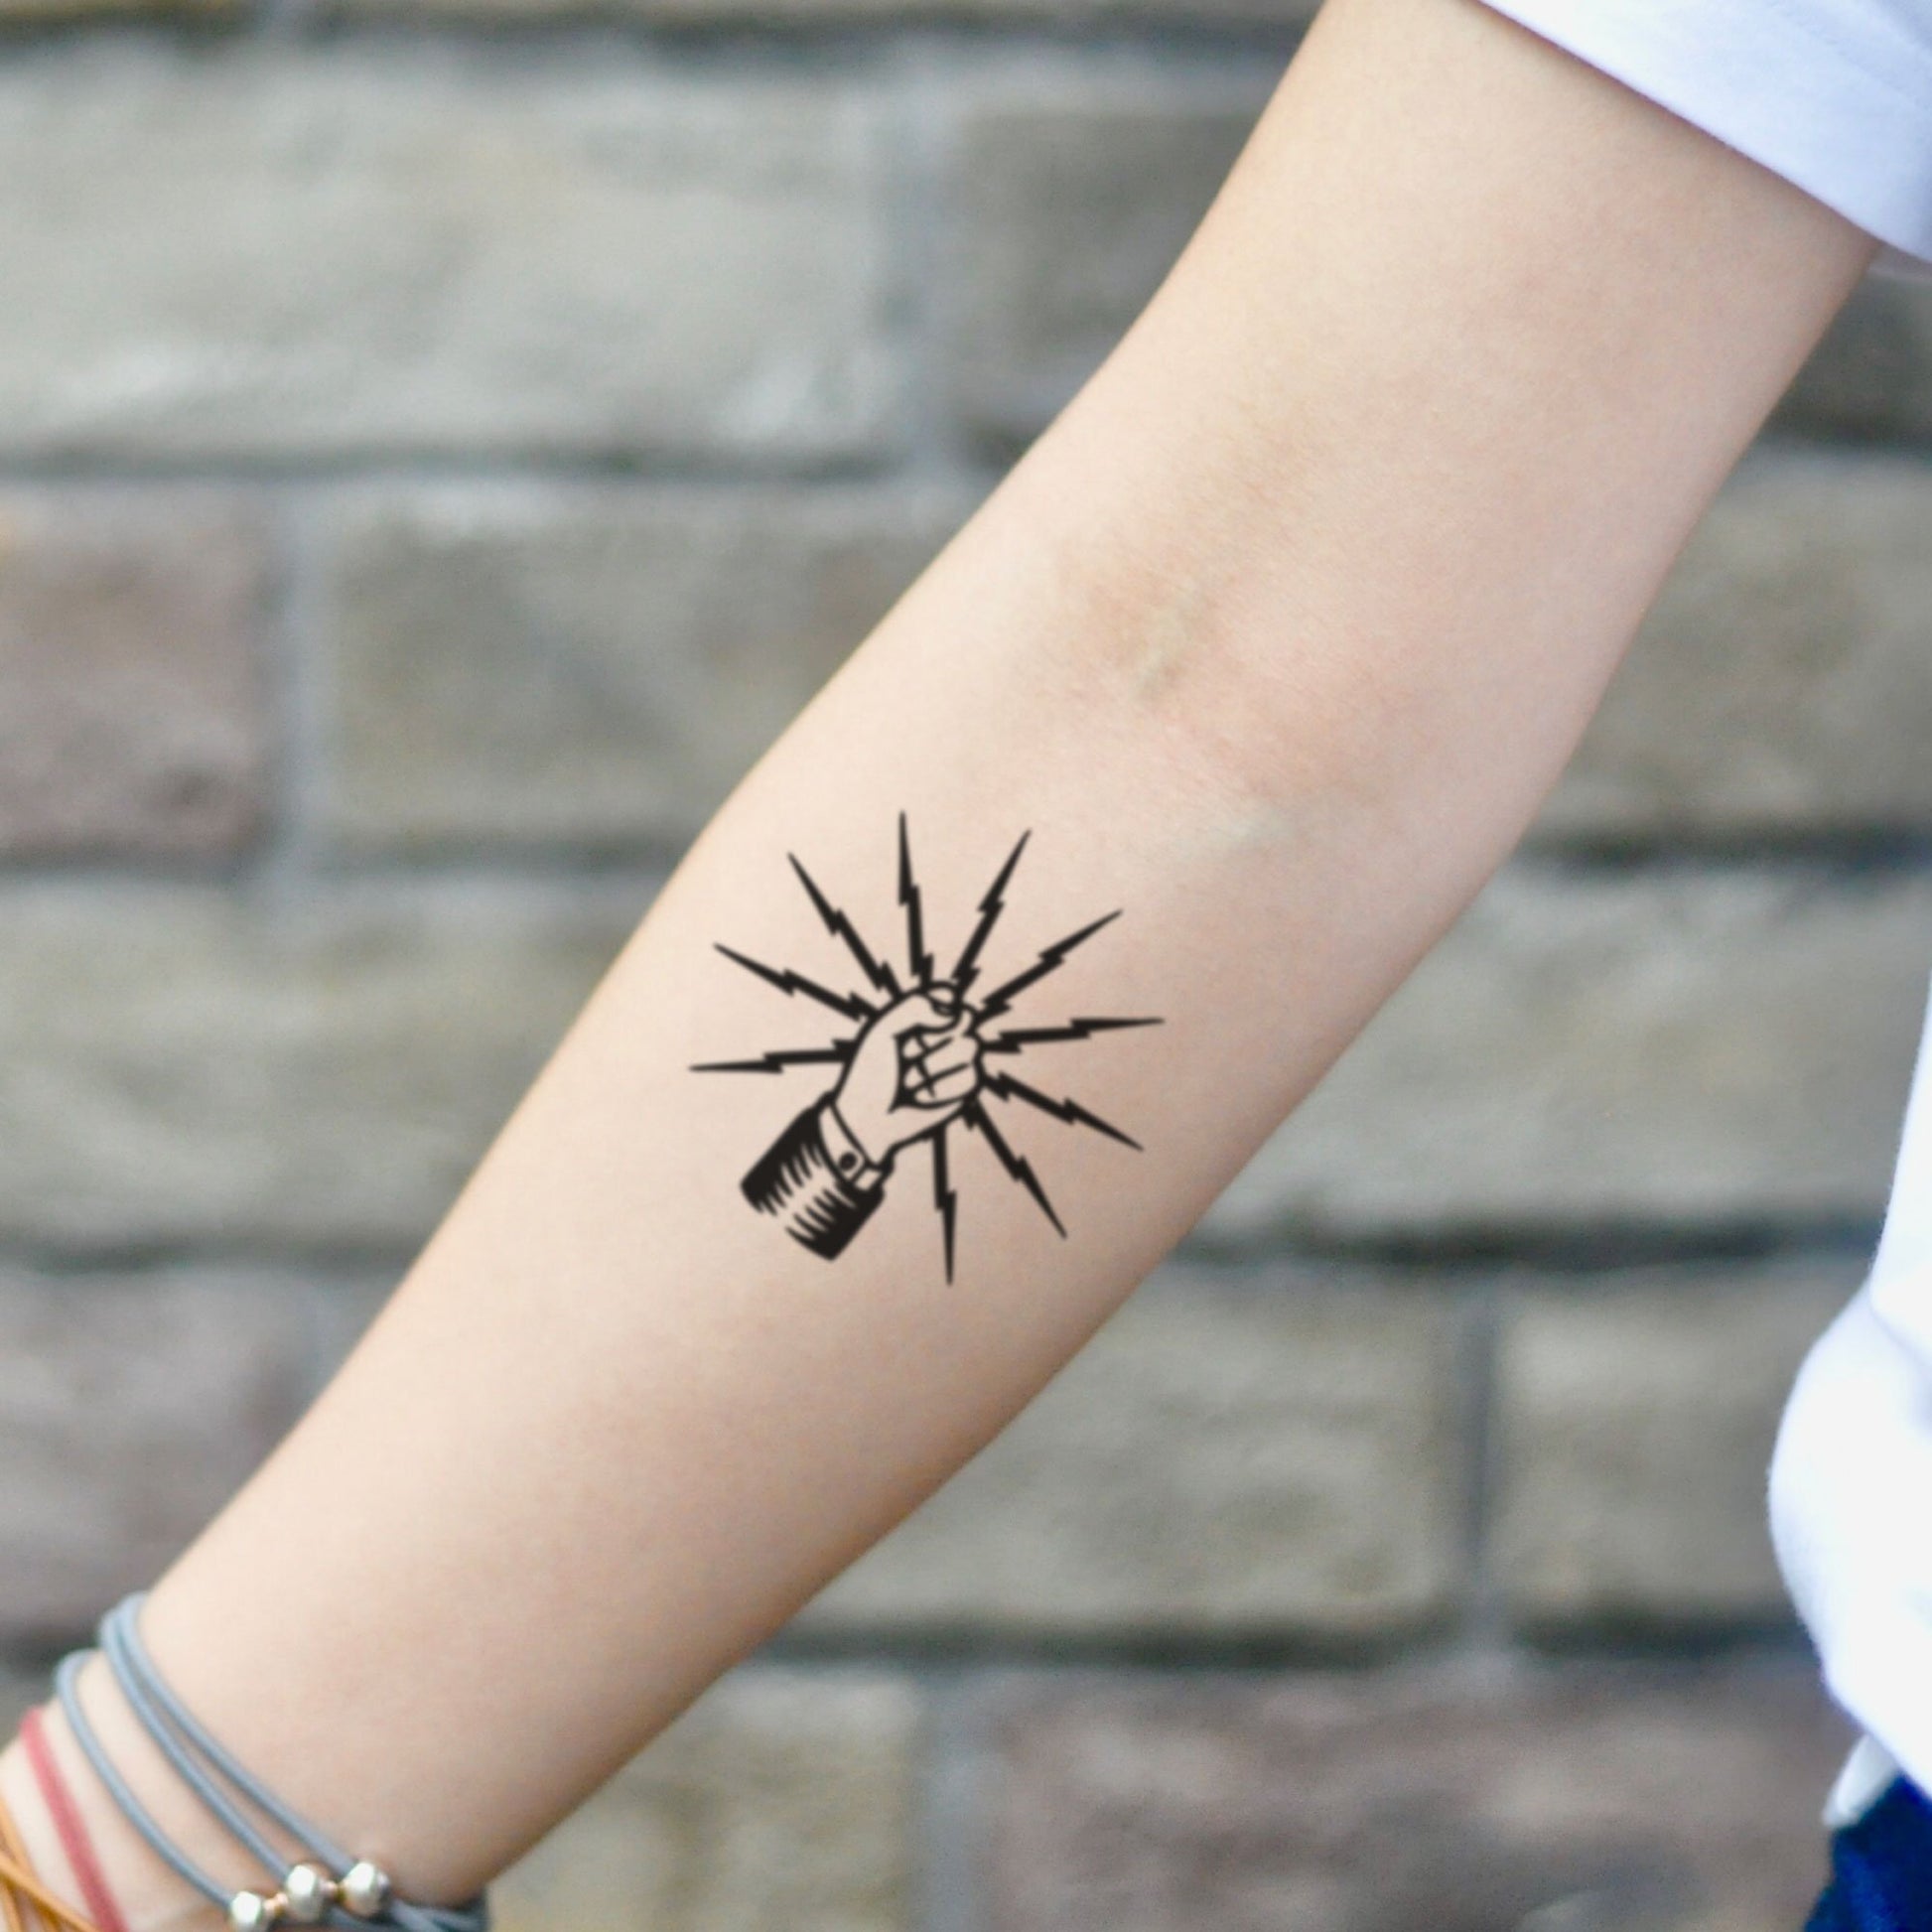 fake small ibew lineman illustrative temporary tattoo sticker design idea on inner arm